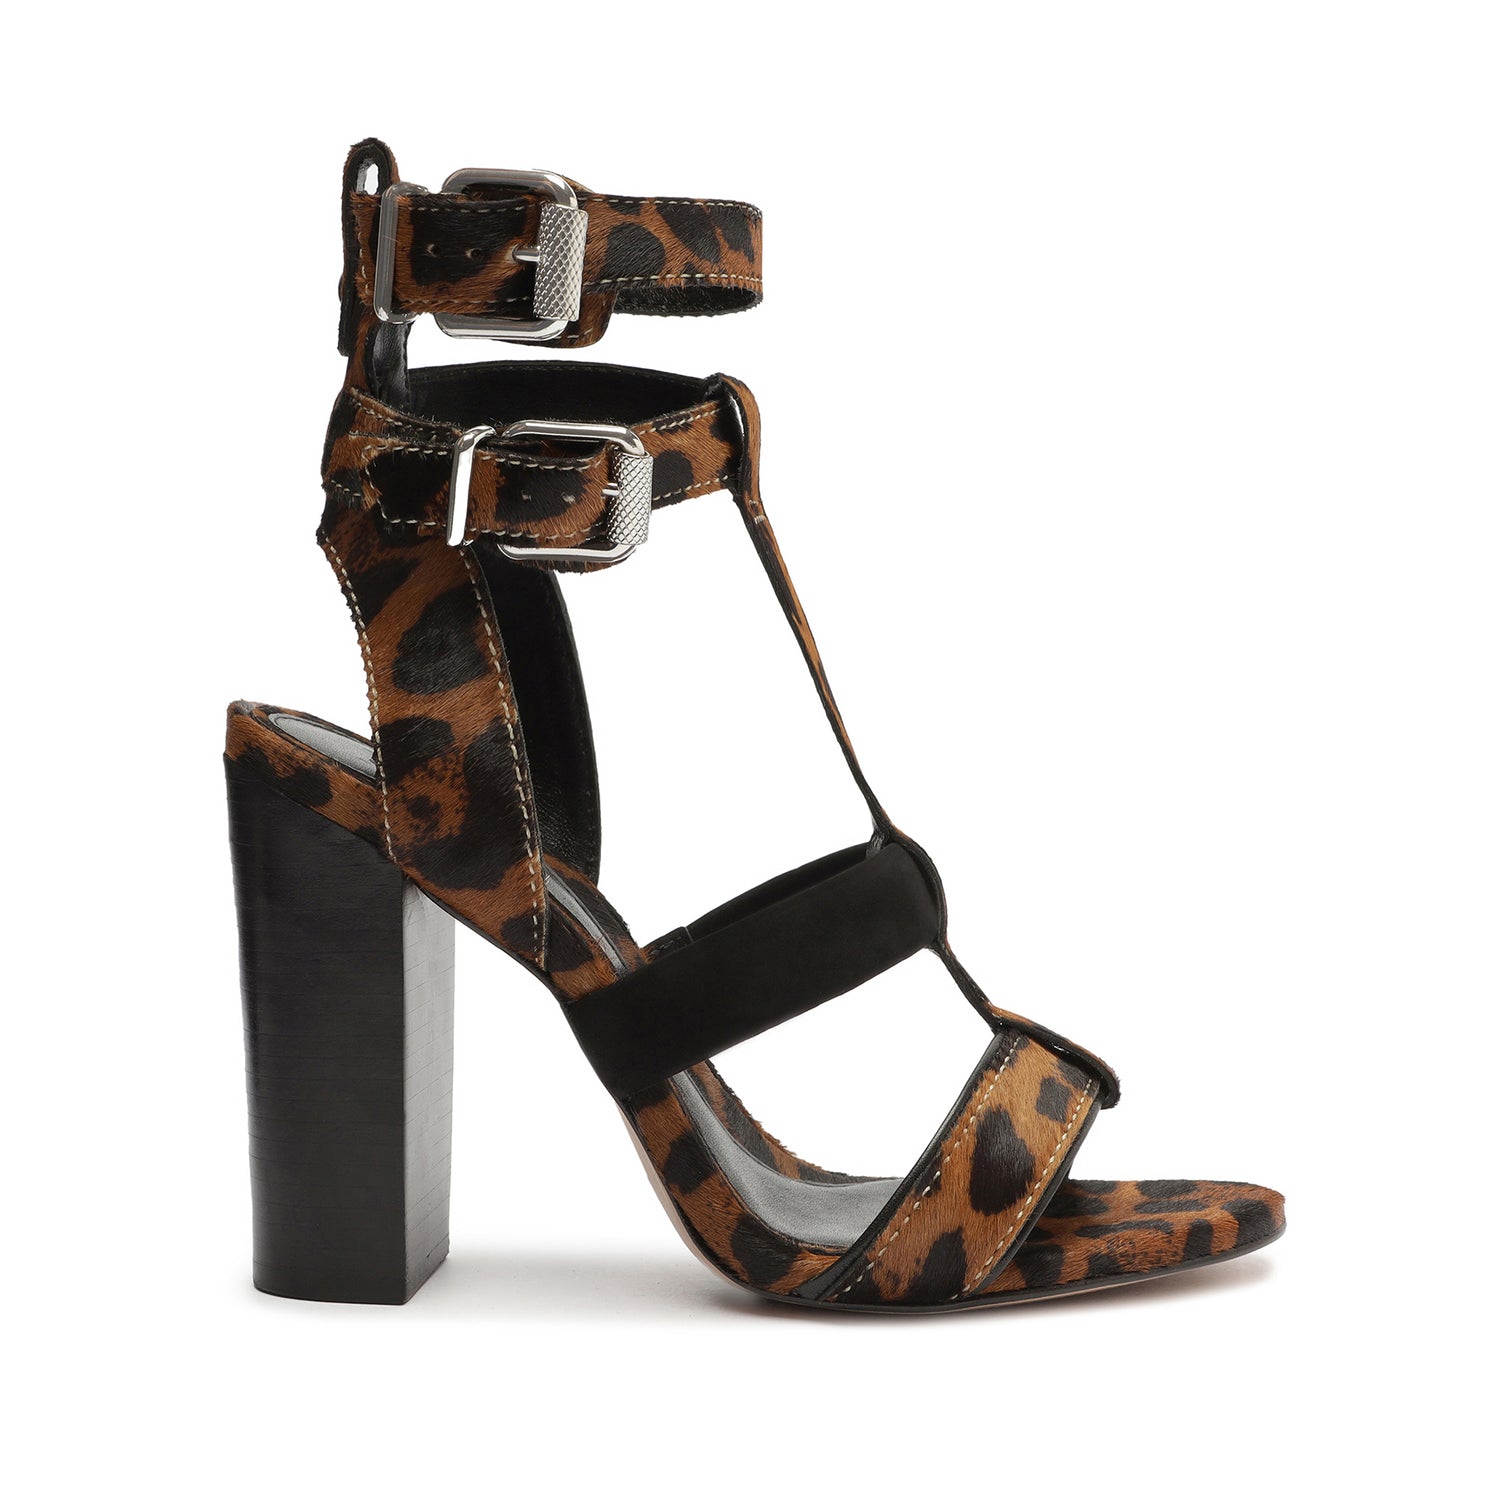 Chantelle Leopard-Printed Leather Sandal Natural Snake Leopard-Printed Leather